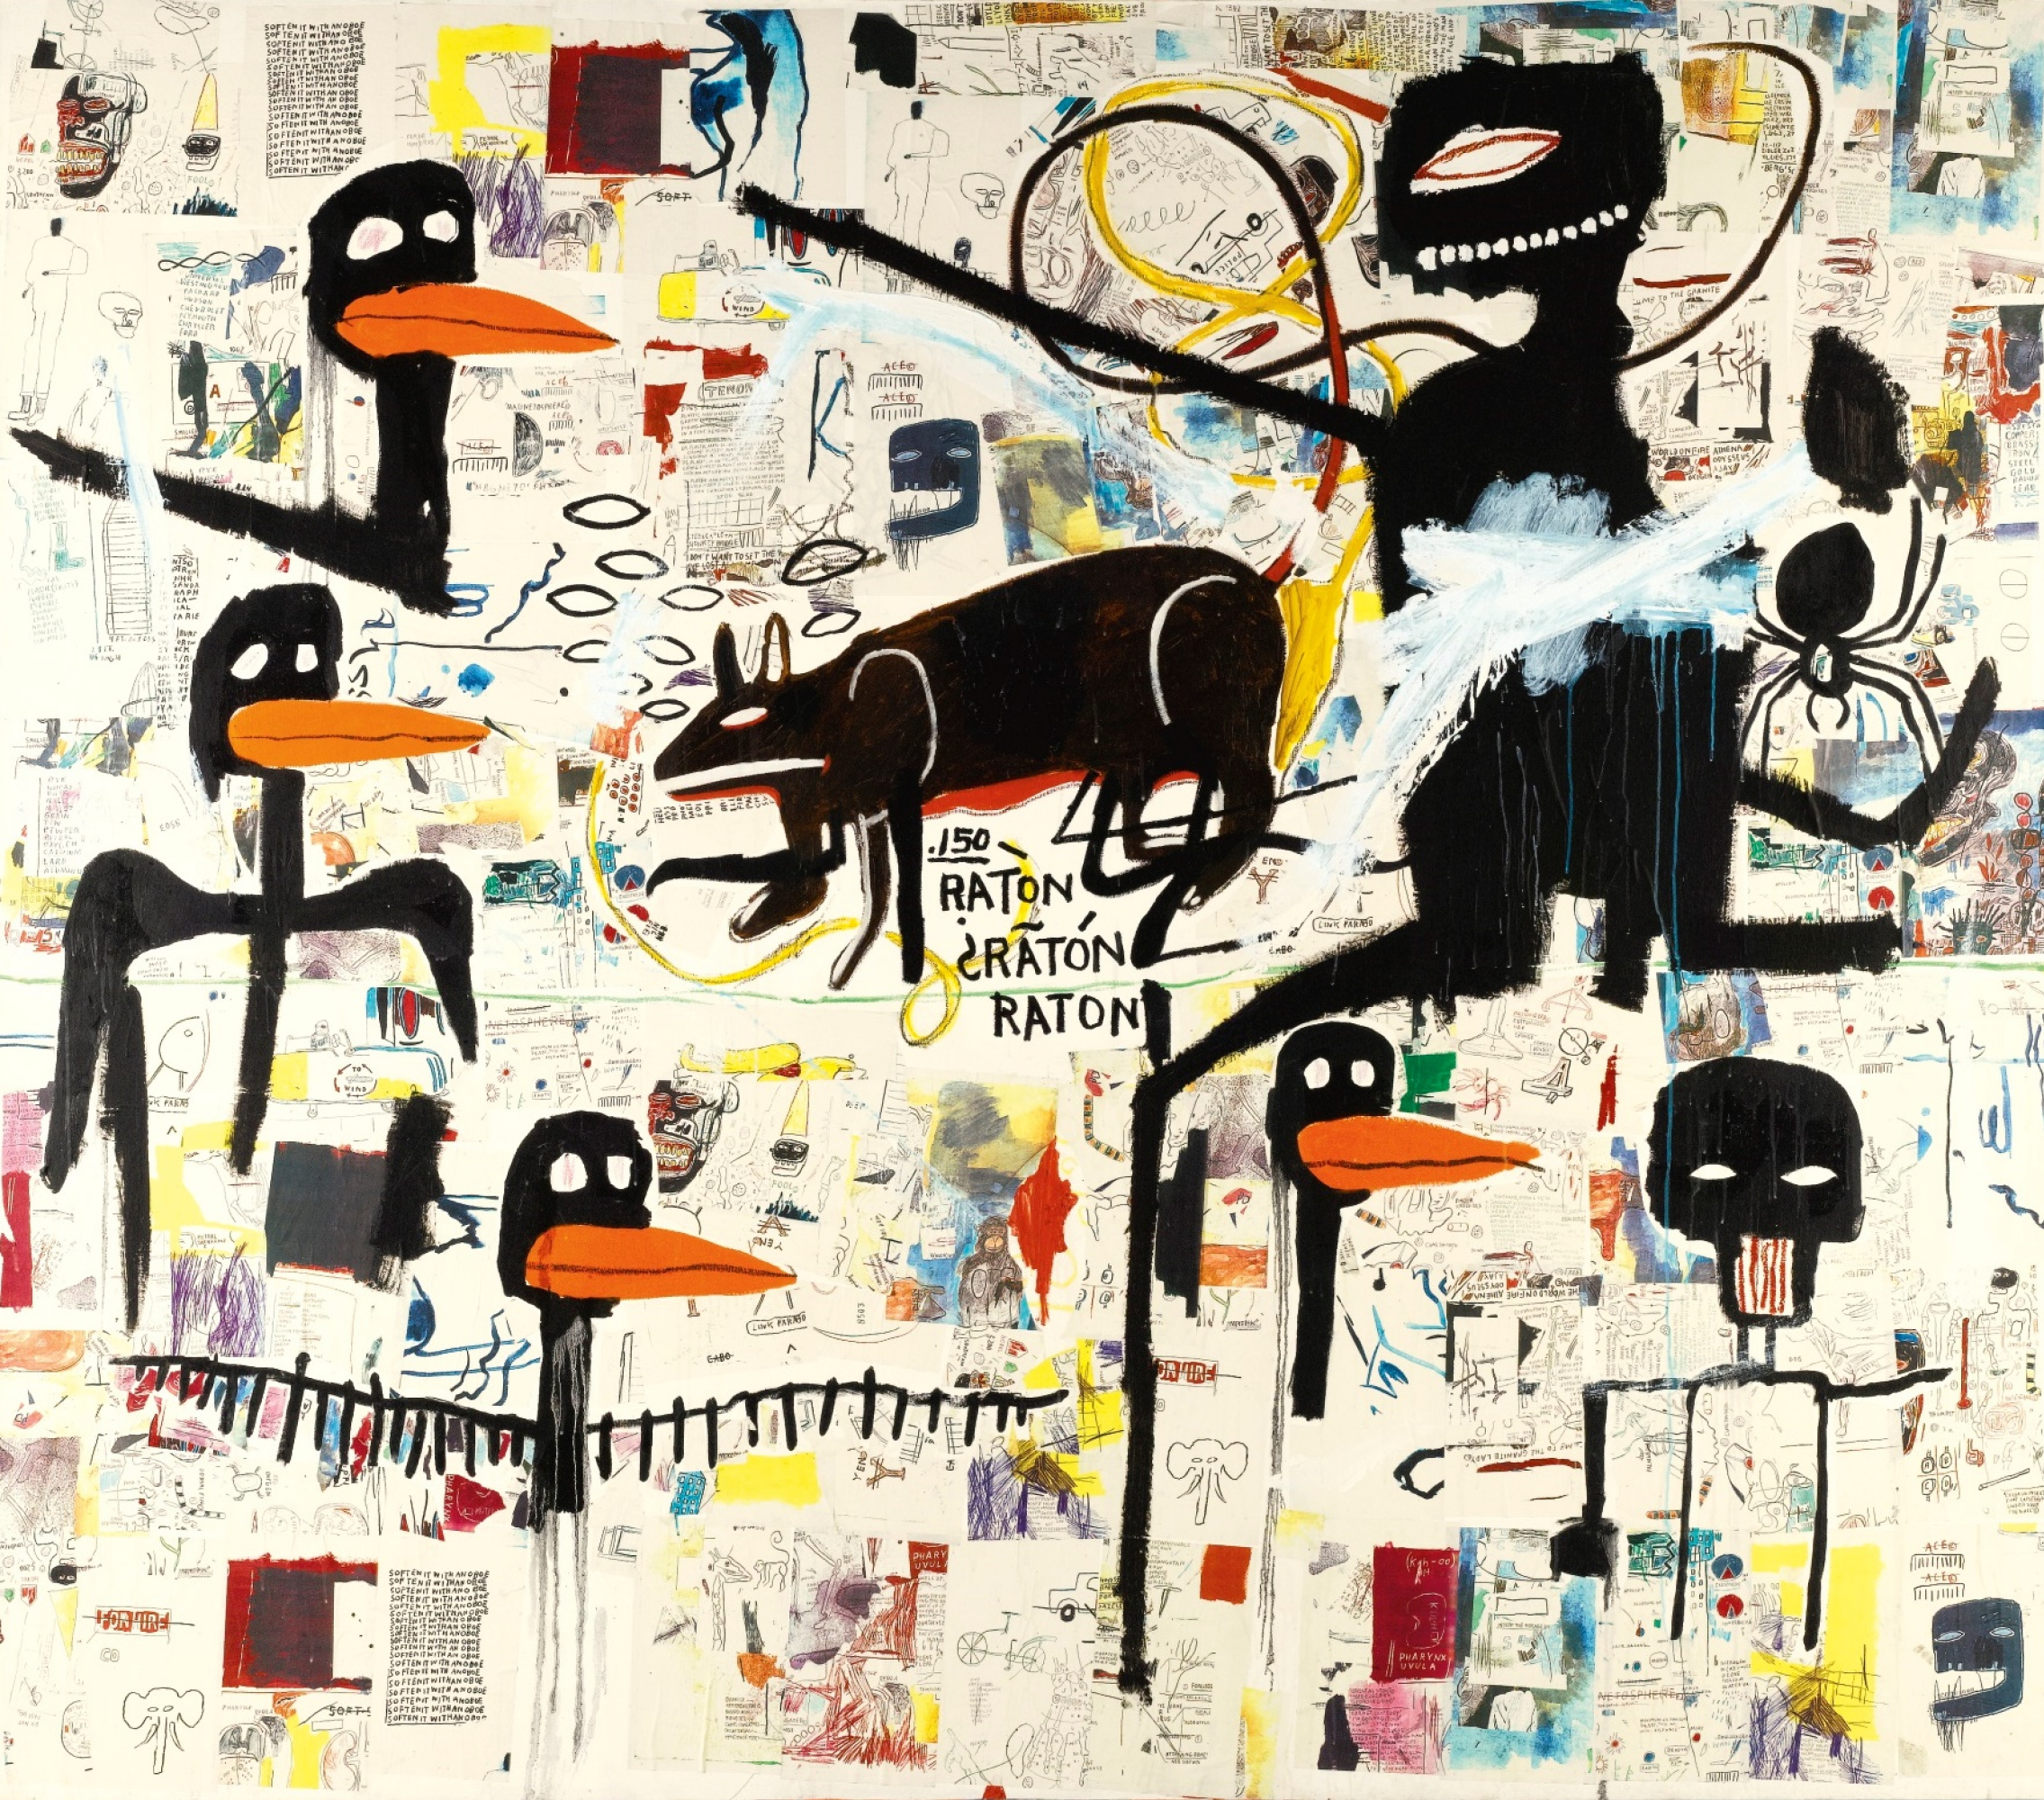 Tenor (Тенор), 1985. Жан-Мишель Баския (Jean-Michel Basquiat) - американский художник. Неоэкспрессионизм